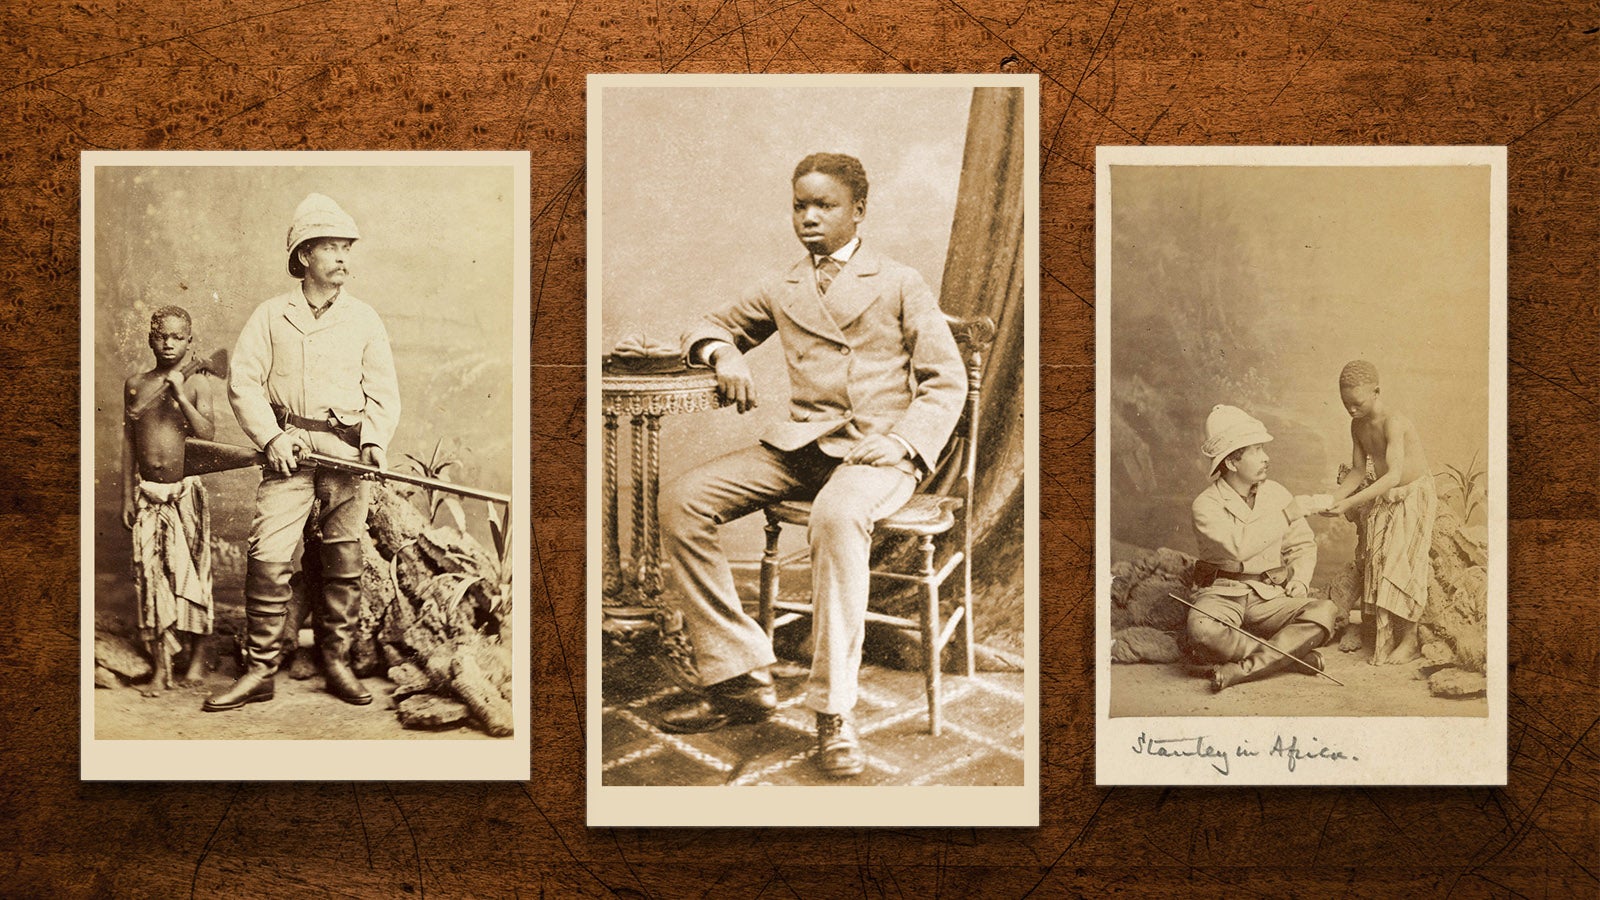 Three photographs of Ndugu M’hali and Stanley